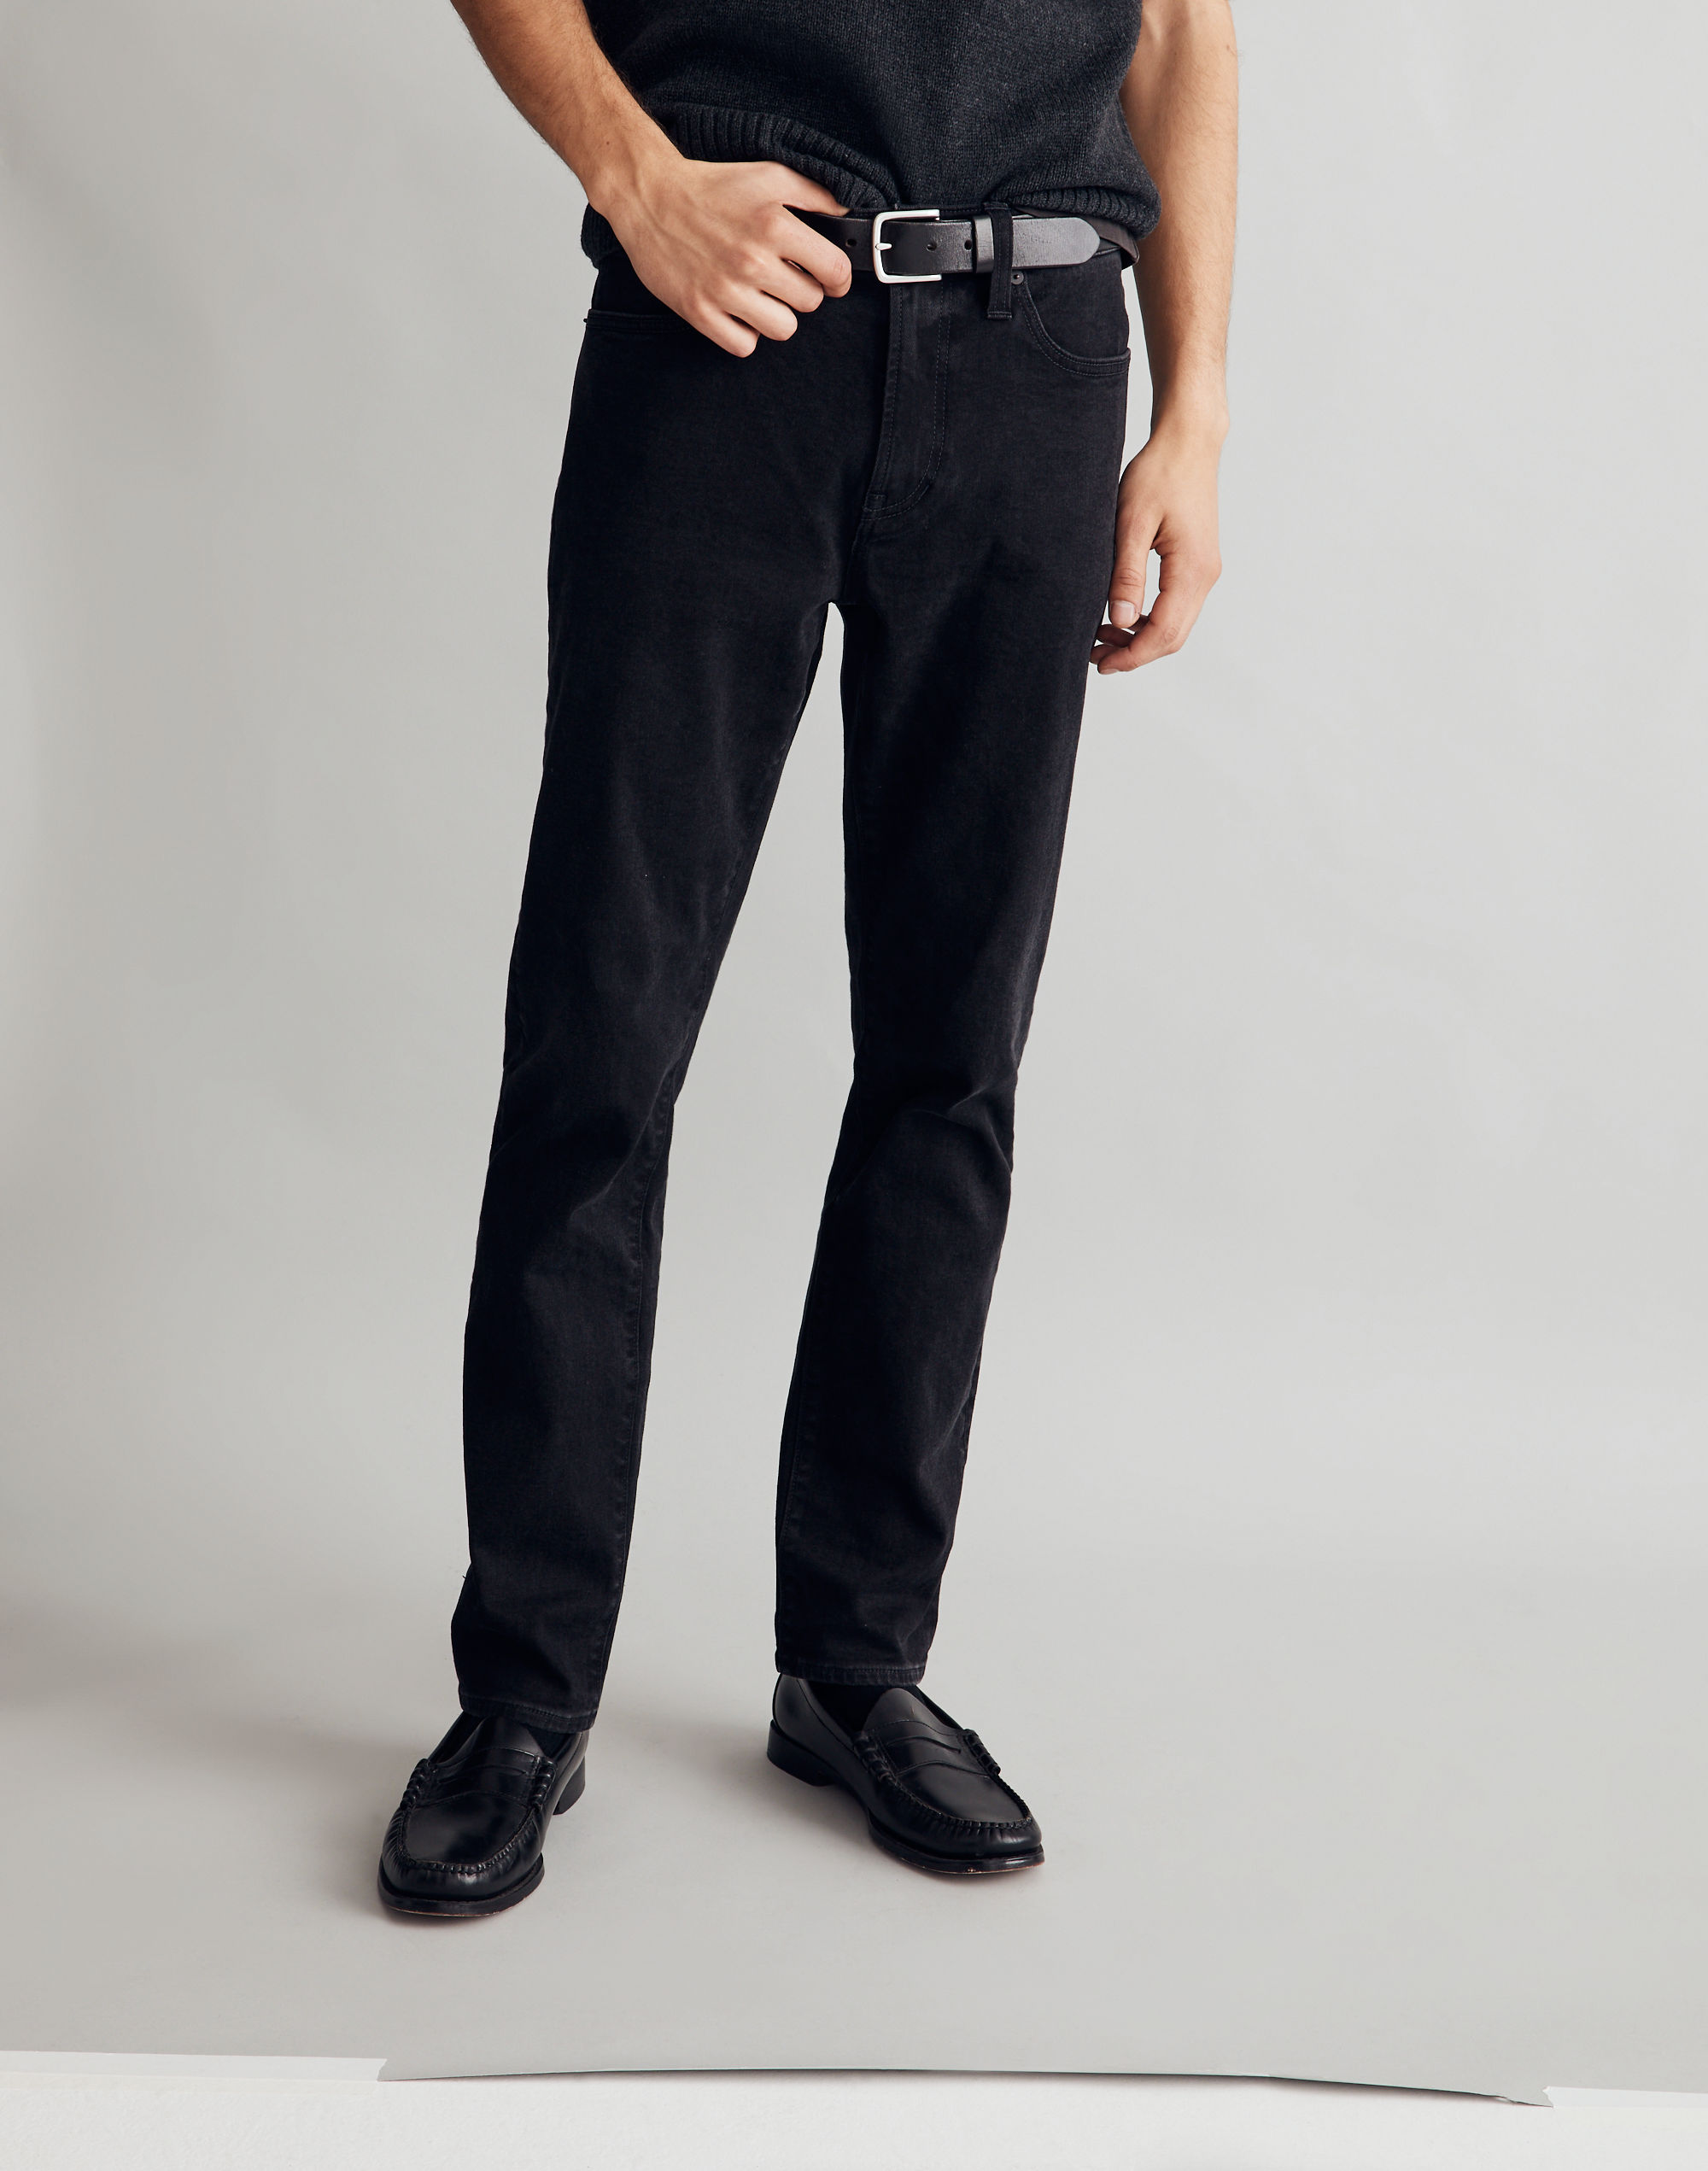 Slim Jeans in Black Wash: Instacozy Edition